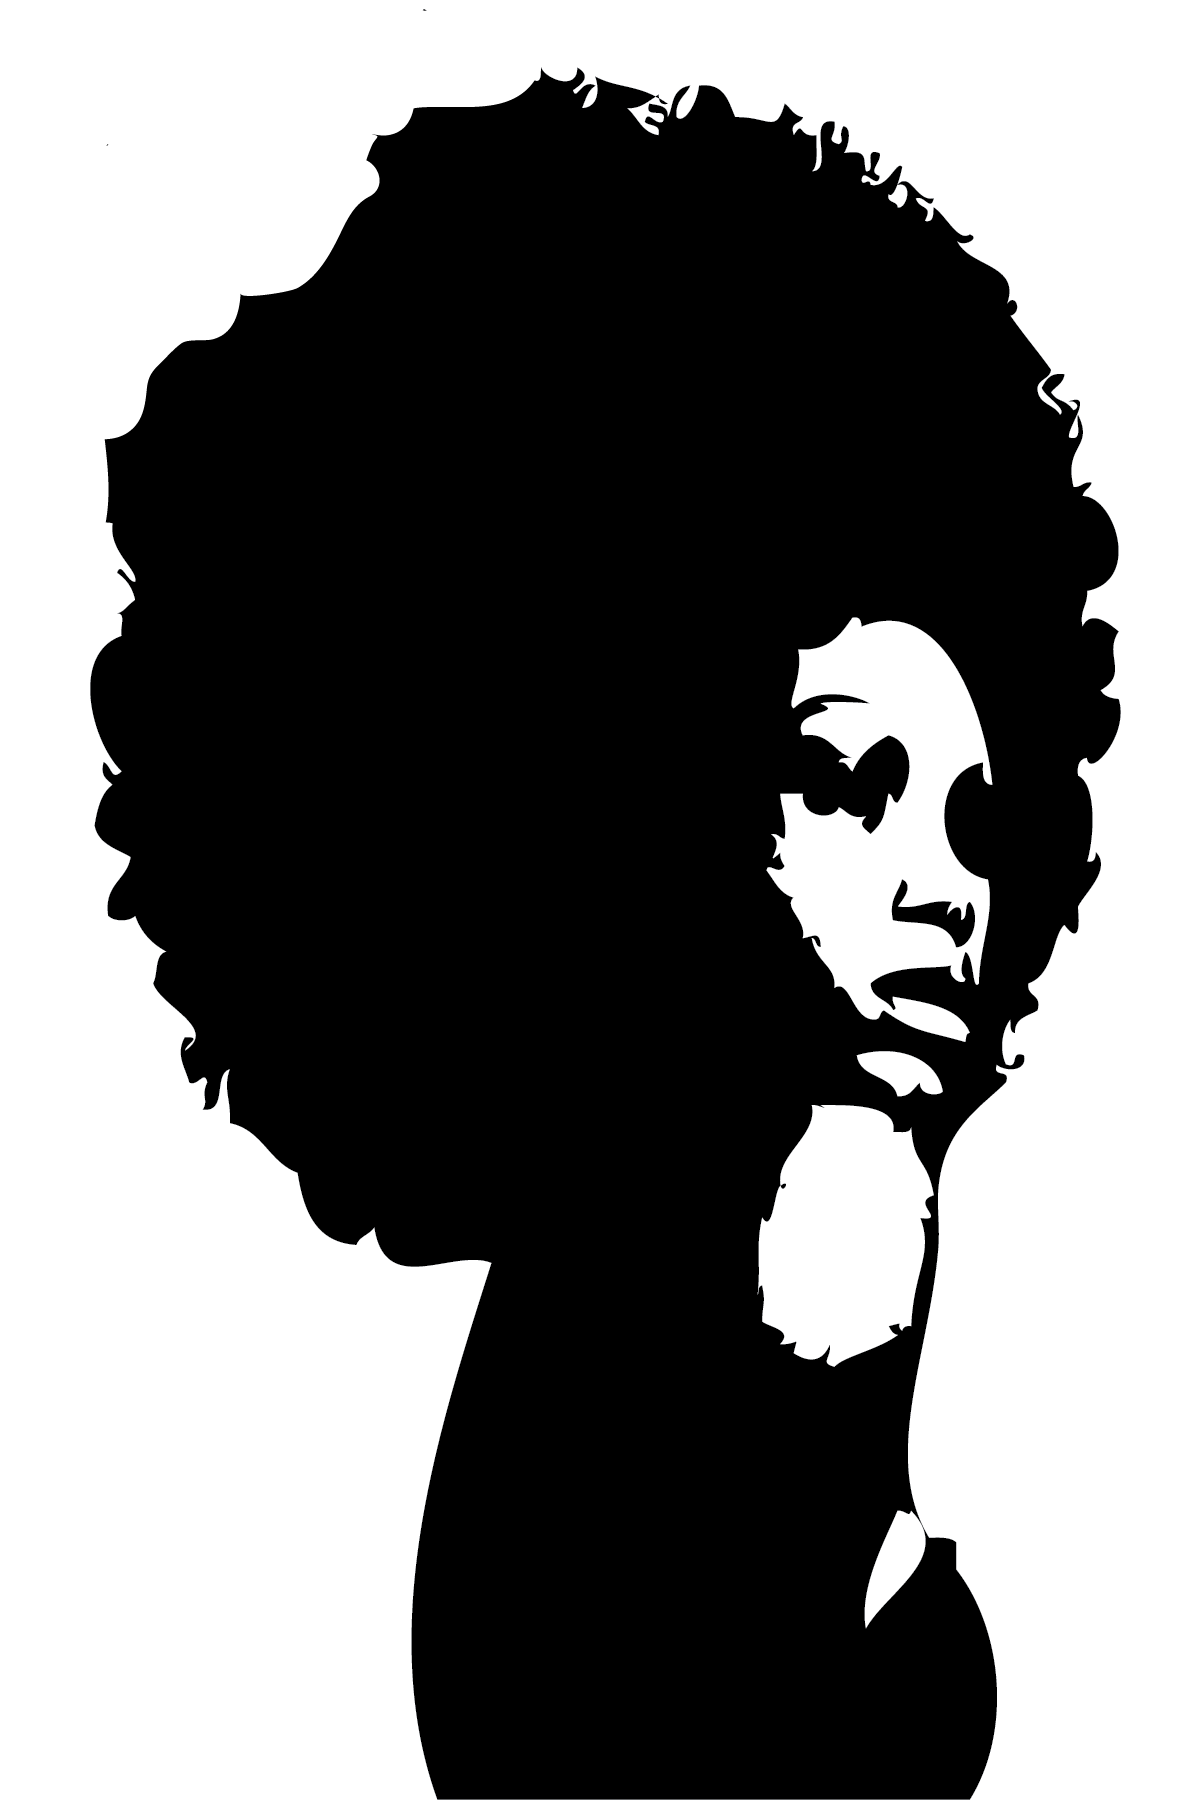 Afro silhouette clip art